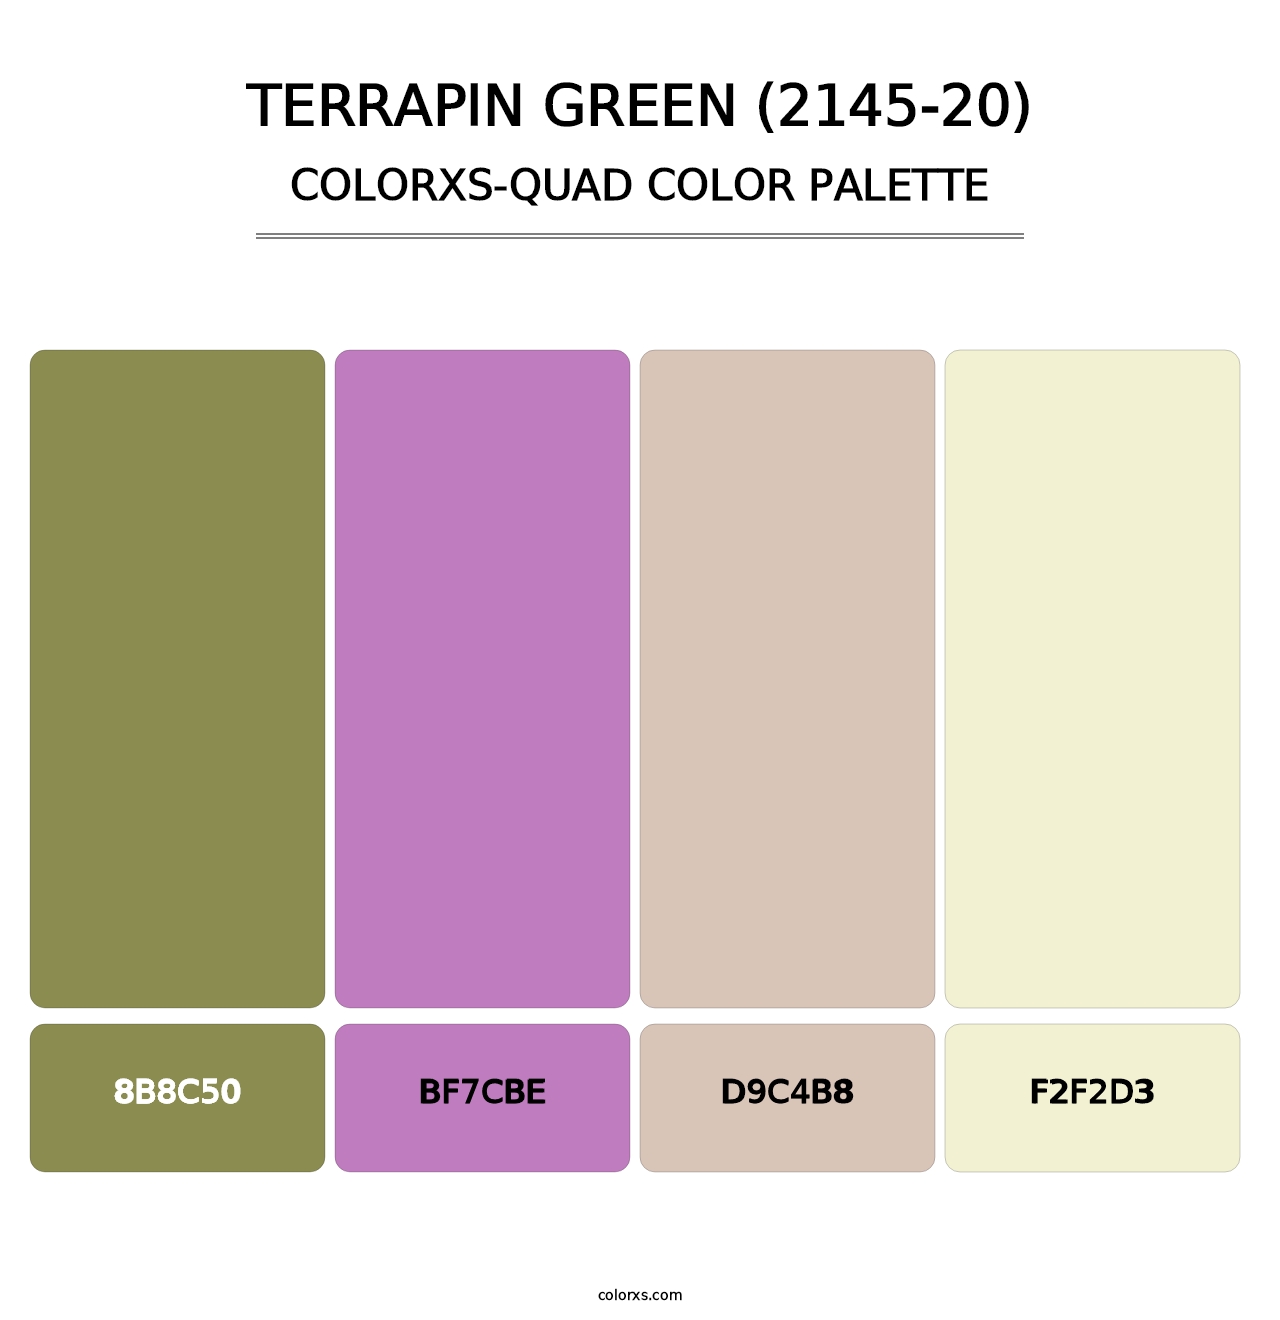 Terrapin Green (2145-20) - Colorxs Quad Palette